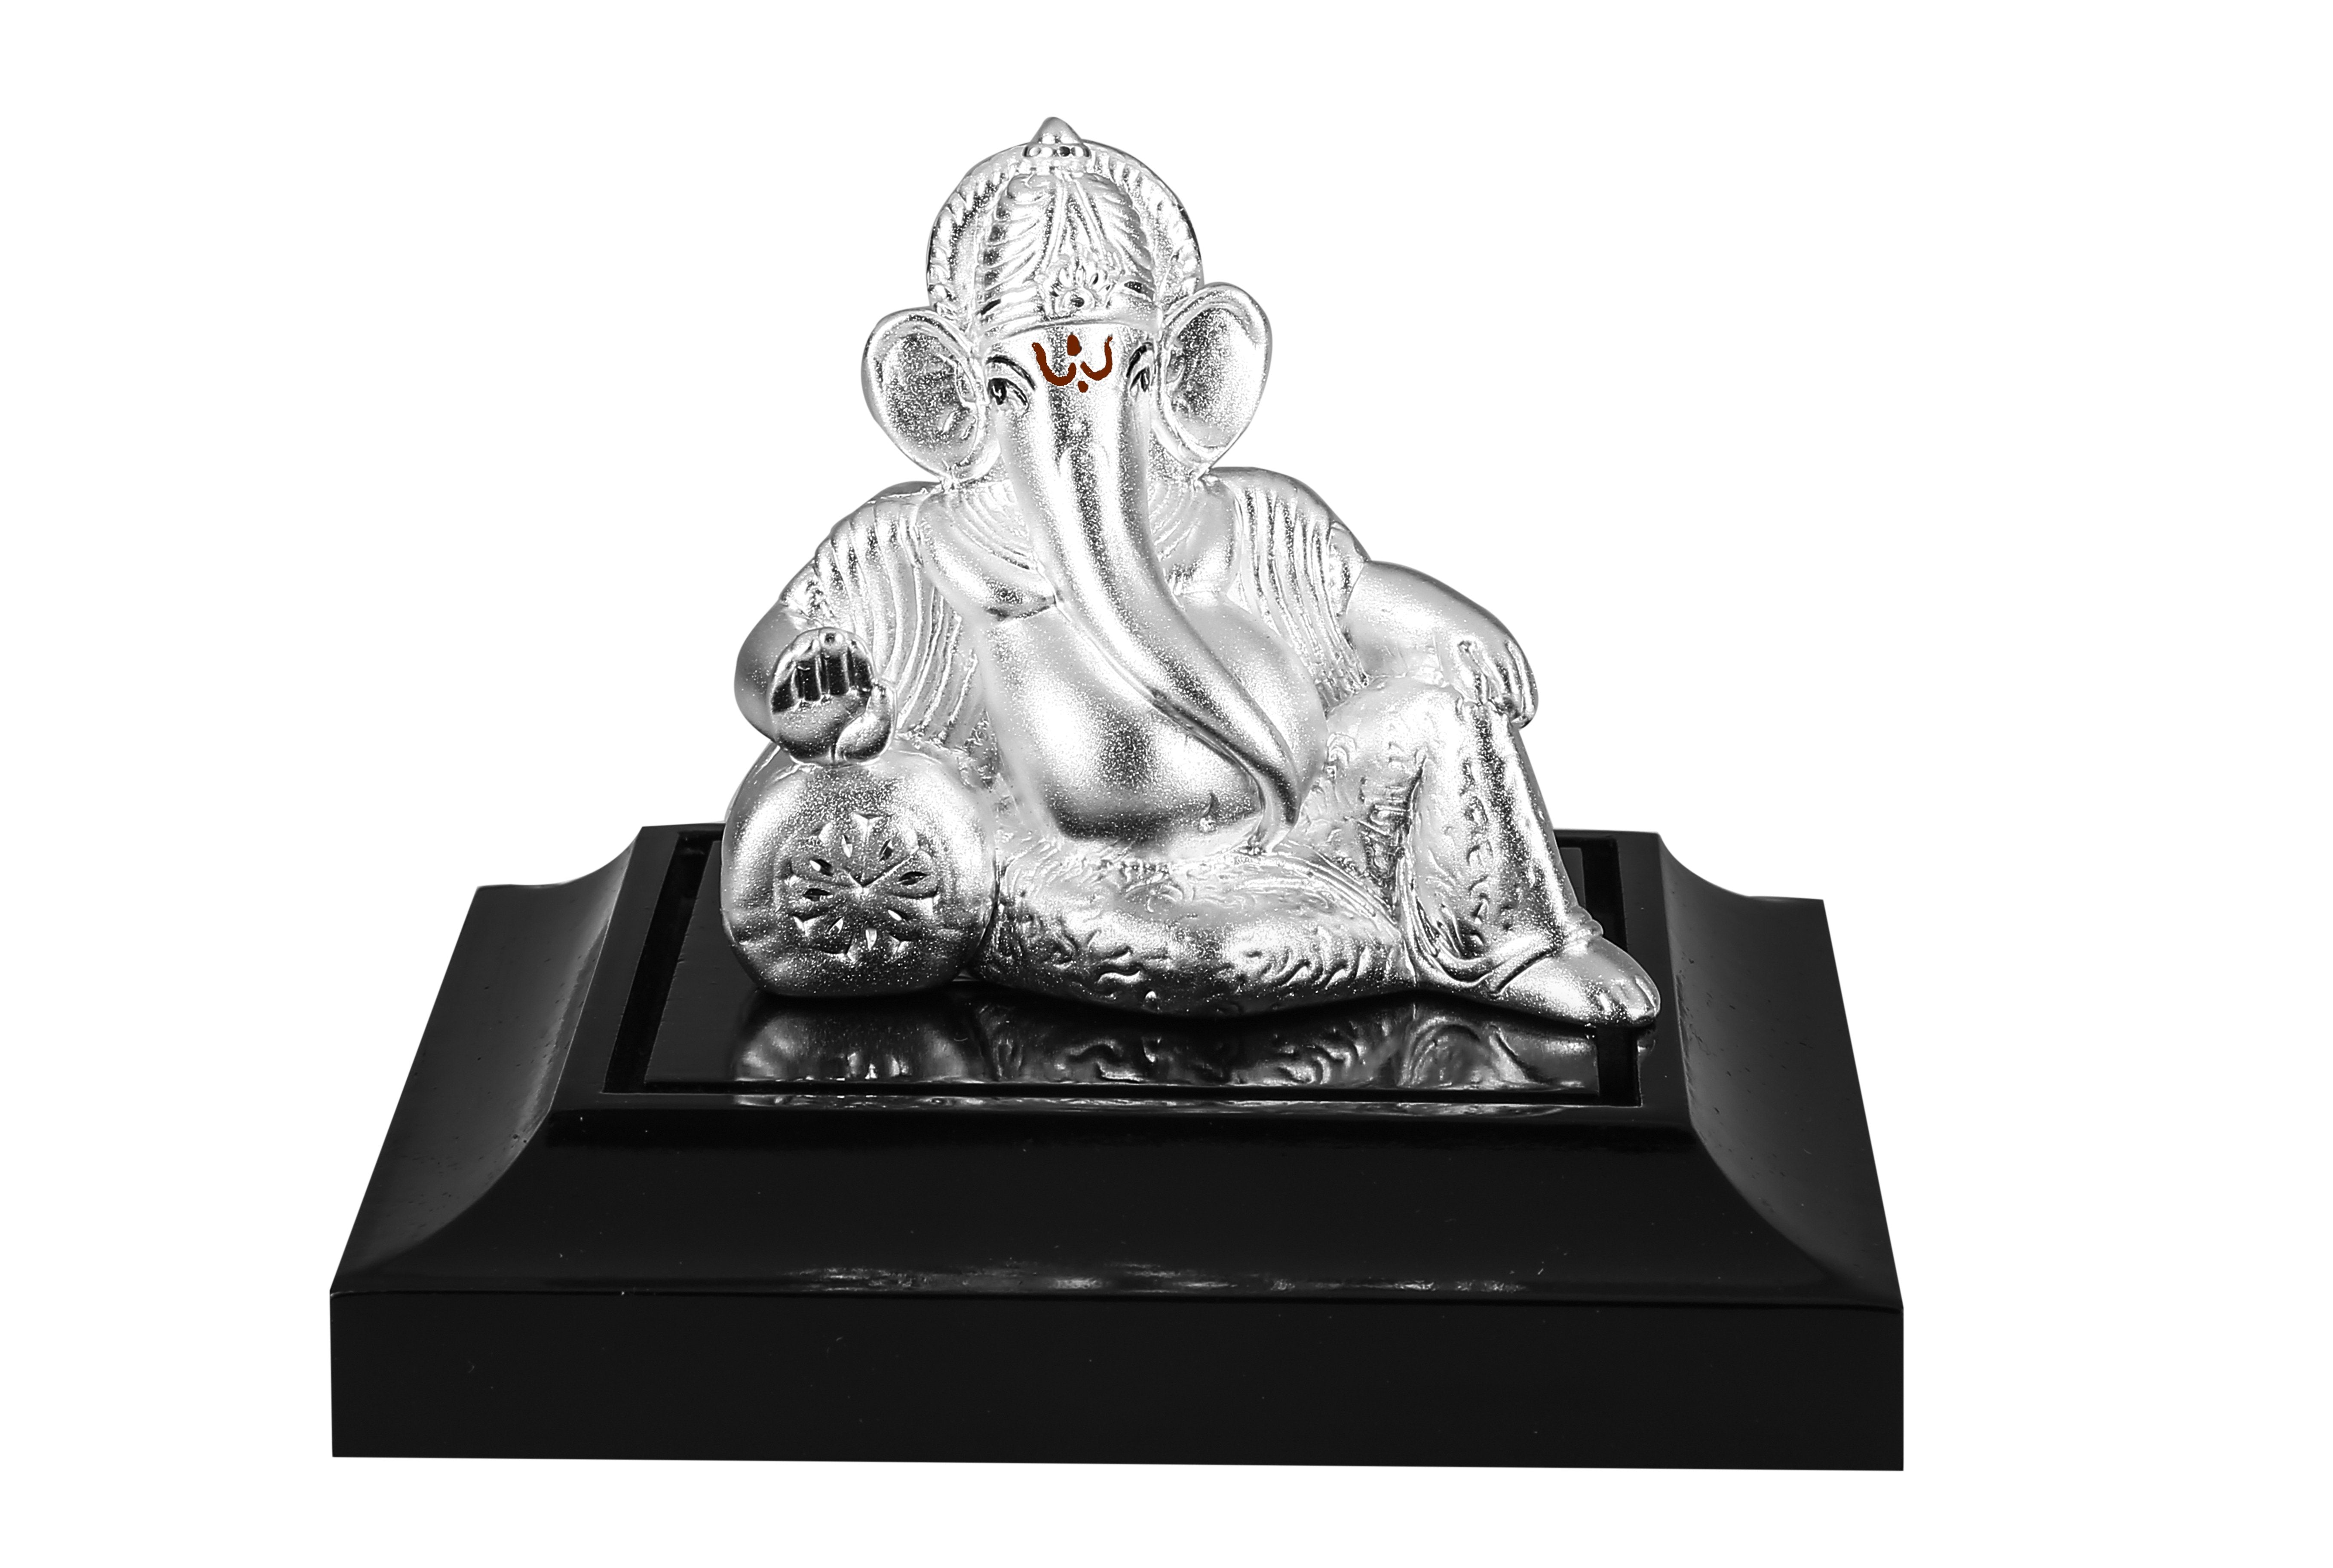 999 Pure Silver Ganesha Idol By Krysaliis Isvara - Krign_19 Plain Idols